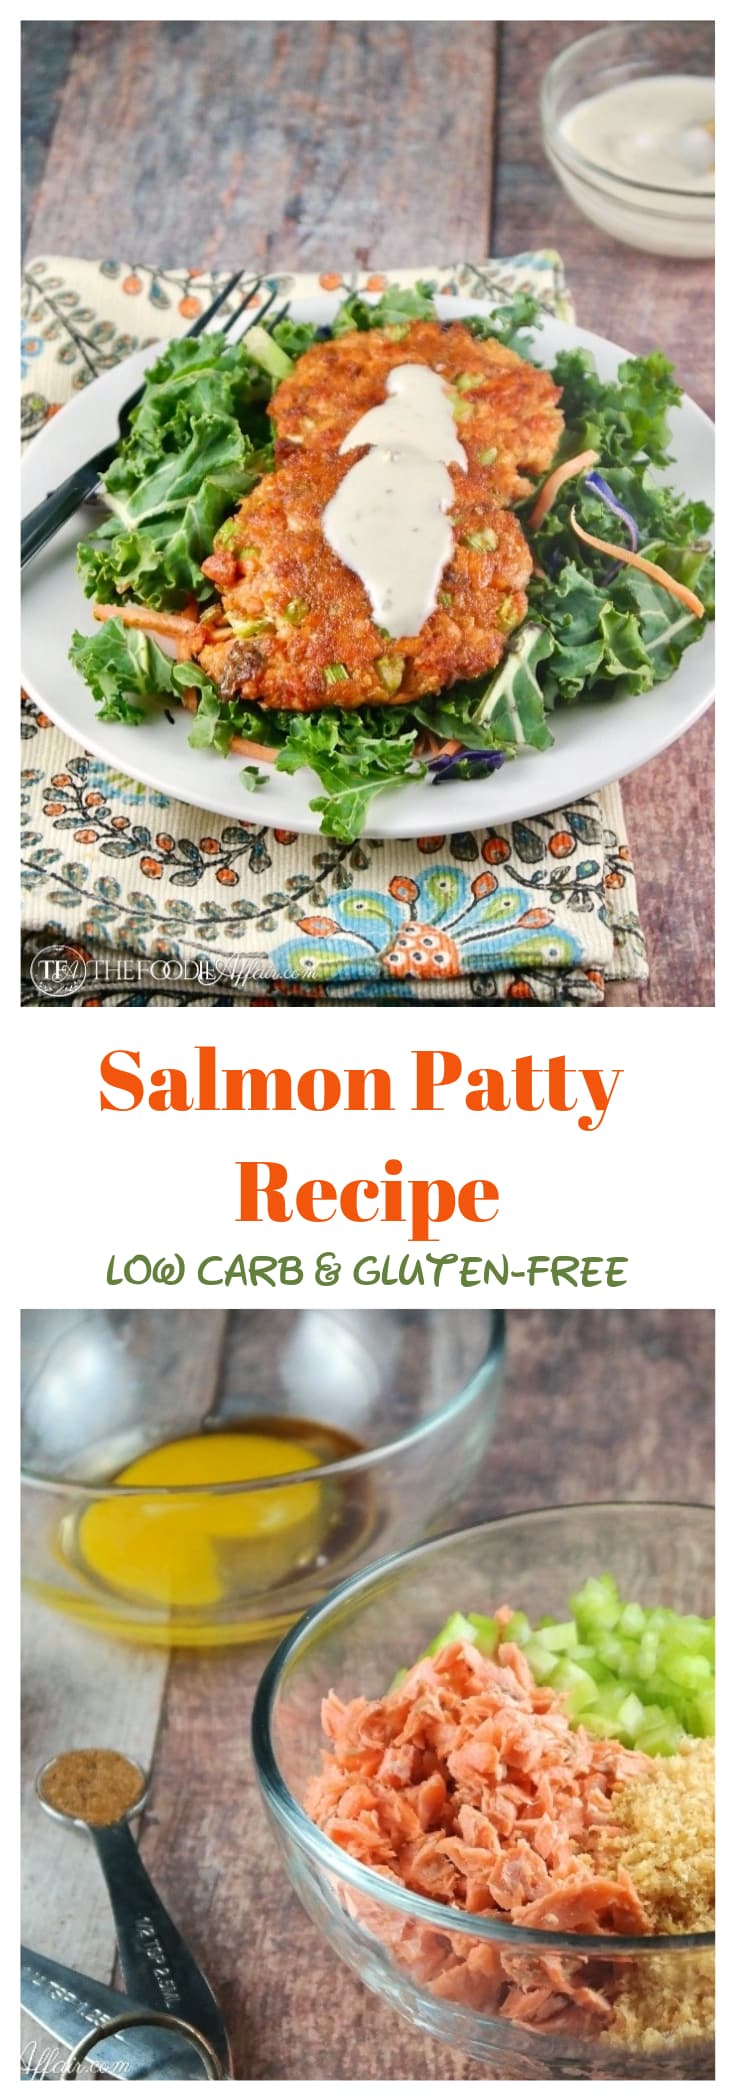 Salmon Patty Recipe | Low Carb, Keto & Gluten Free